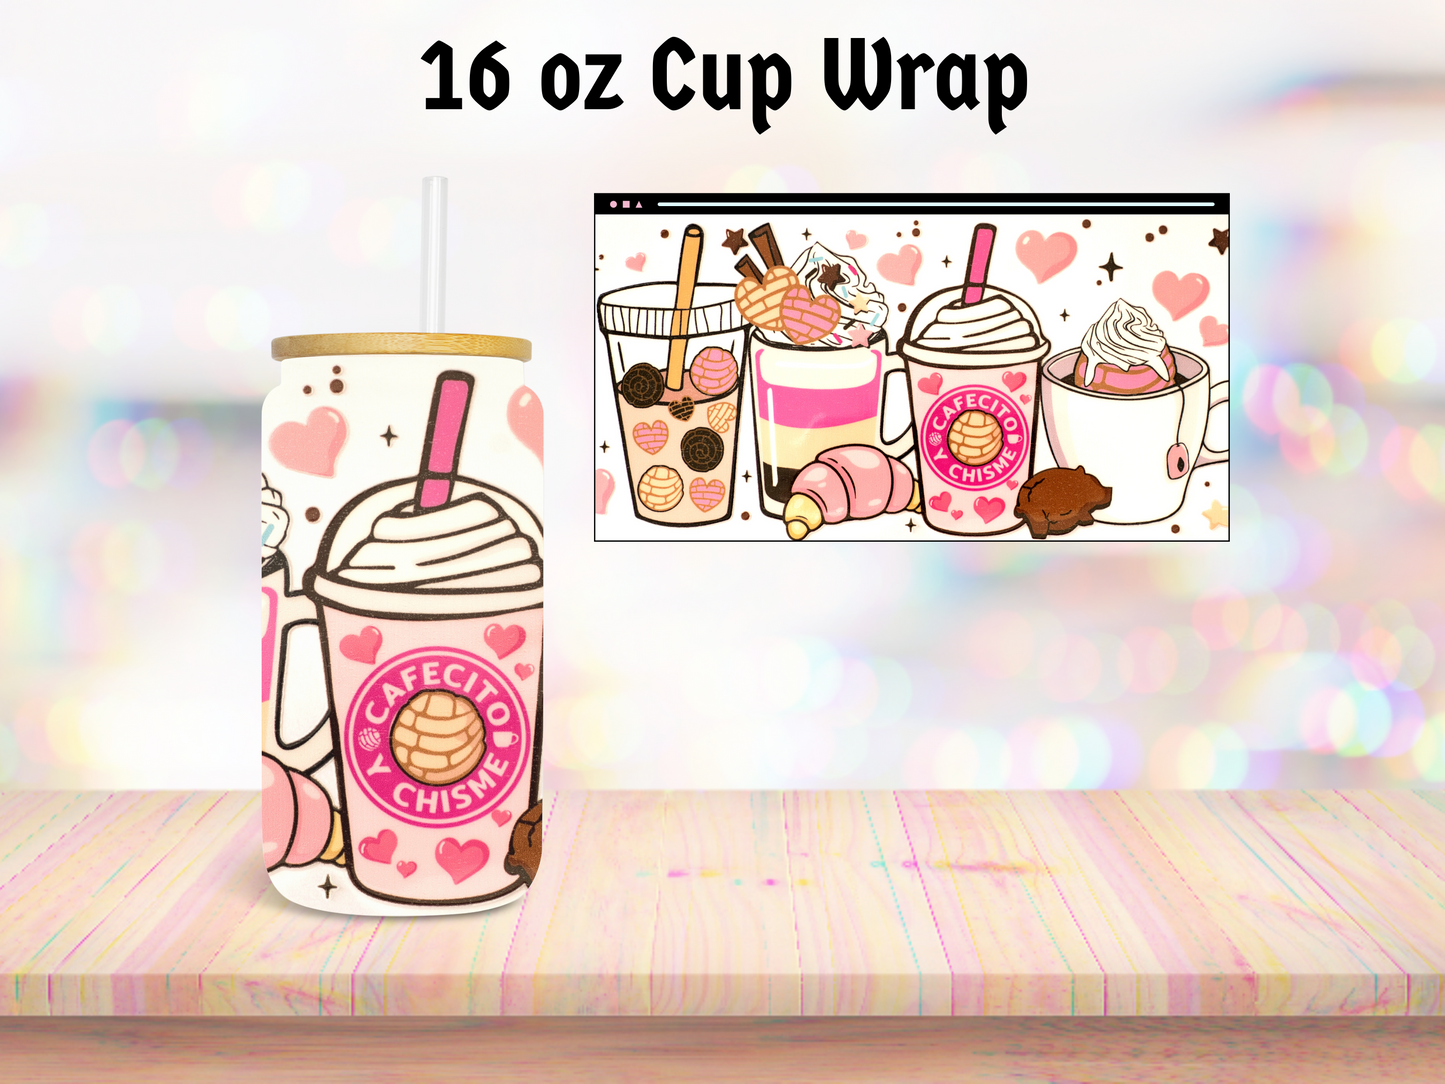 Cafecito Cups 16oz Cup Wrap